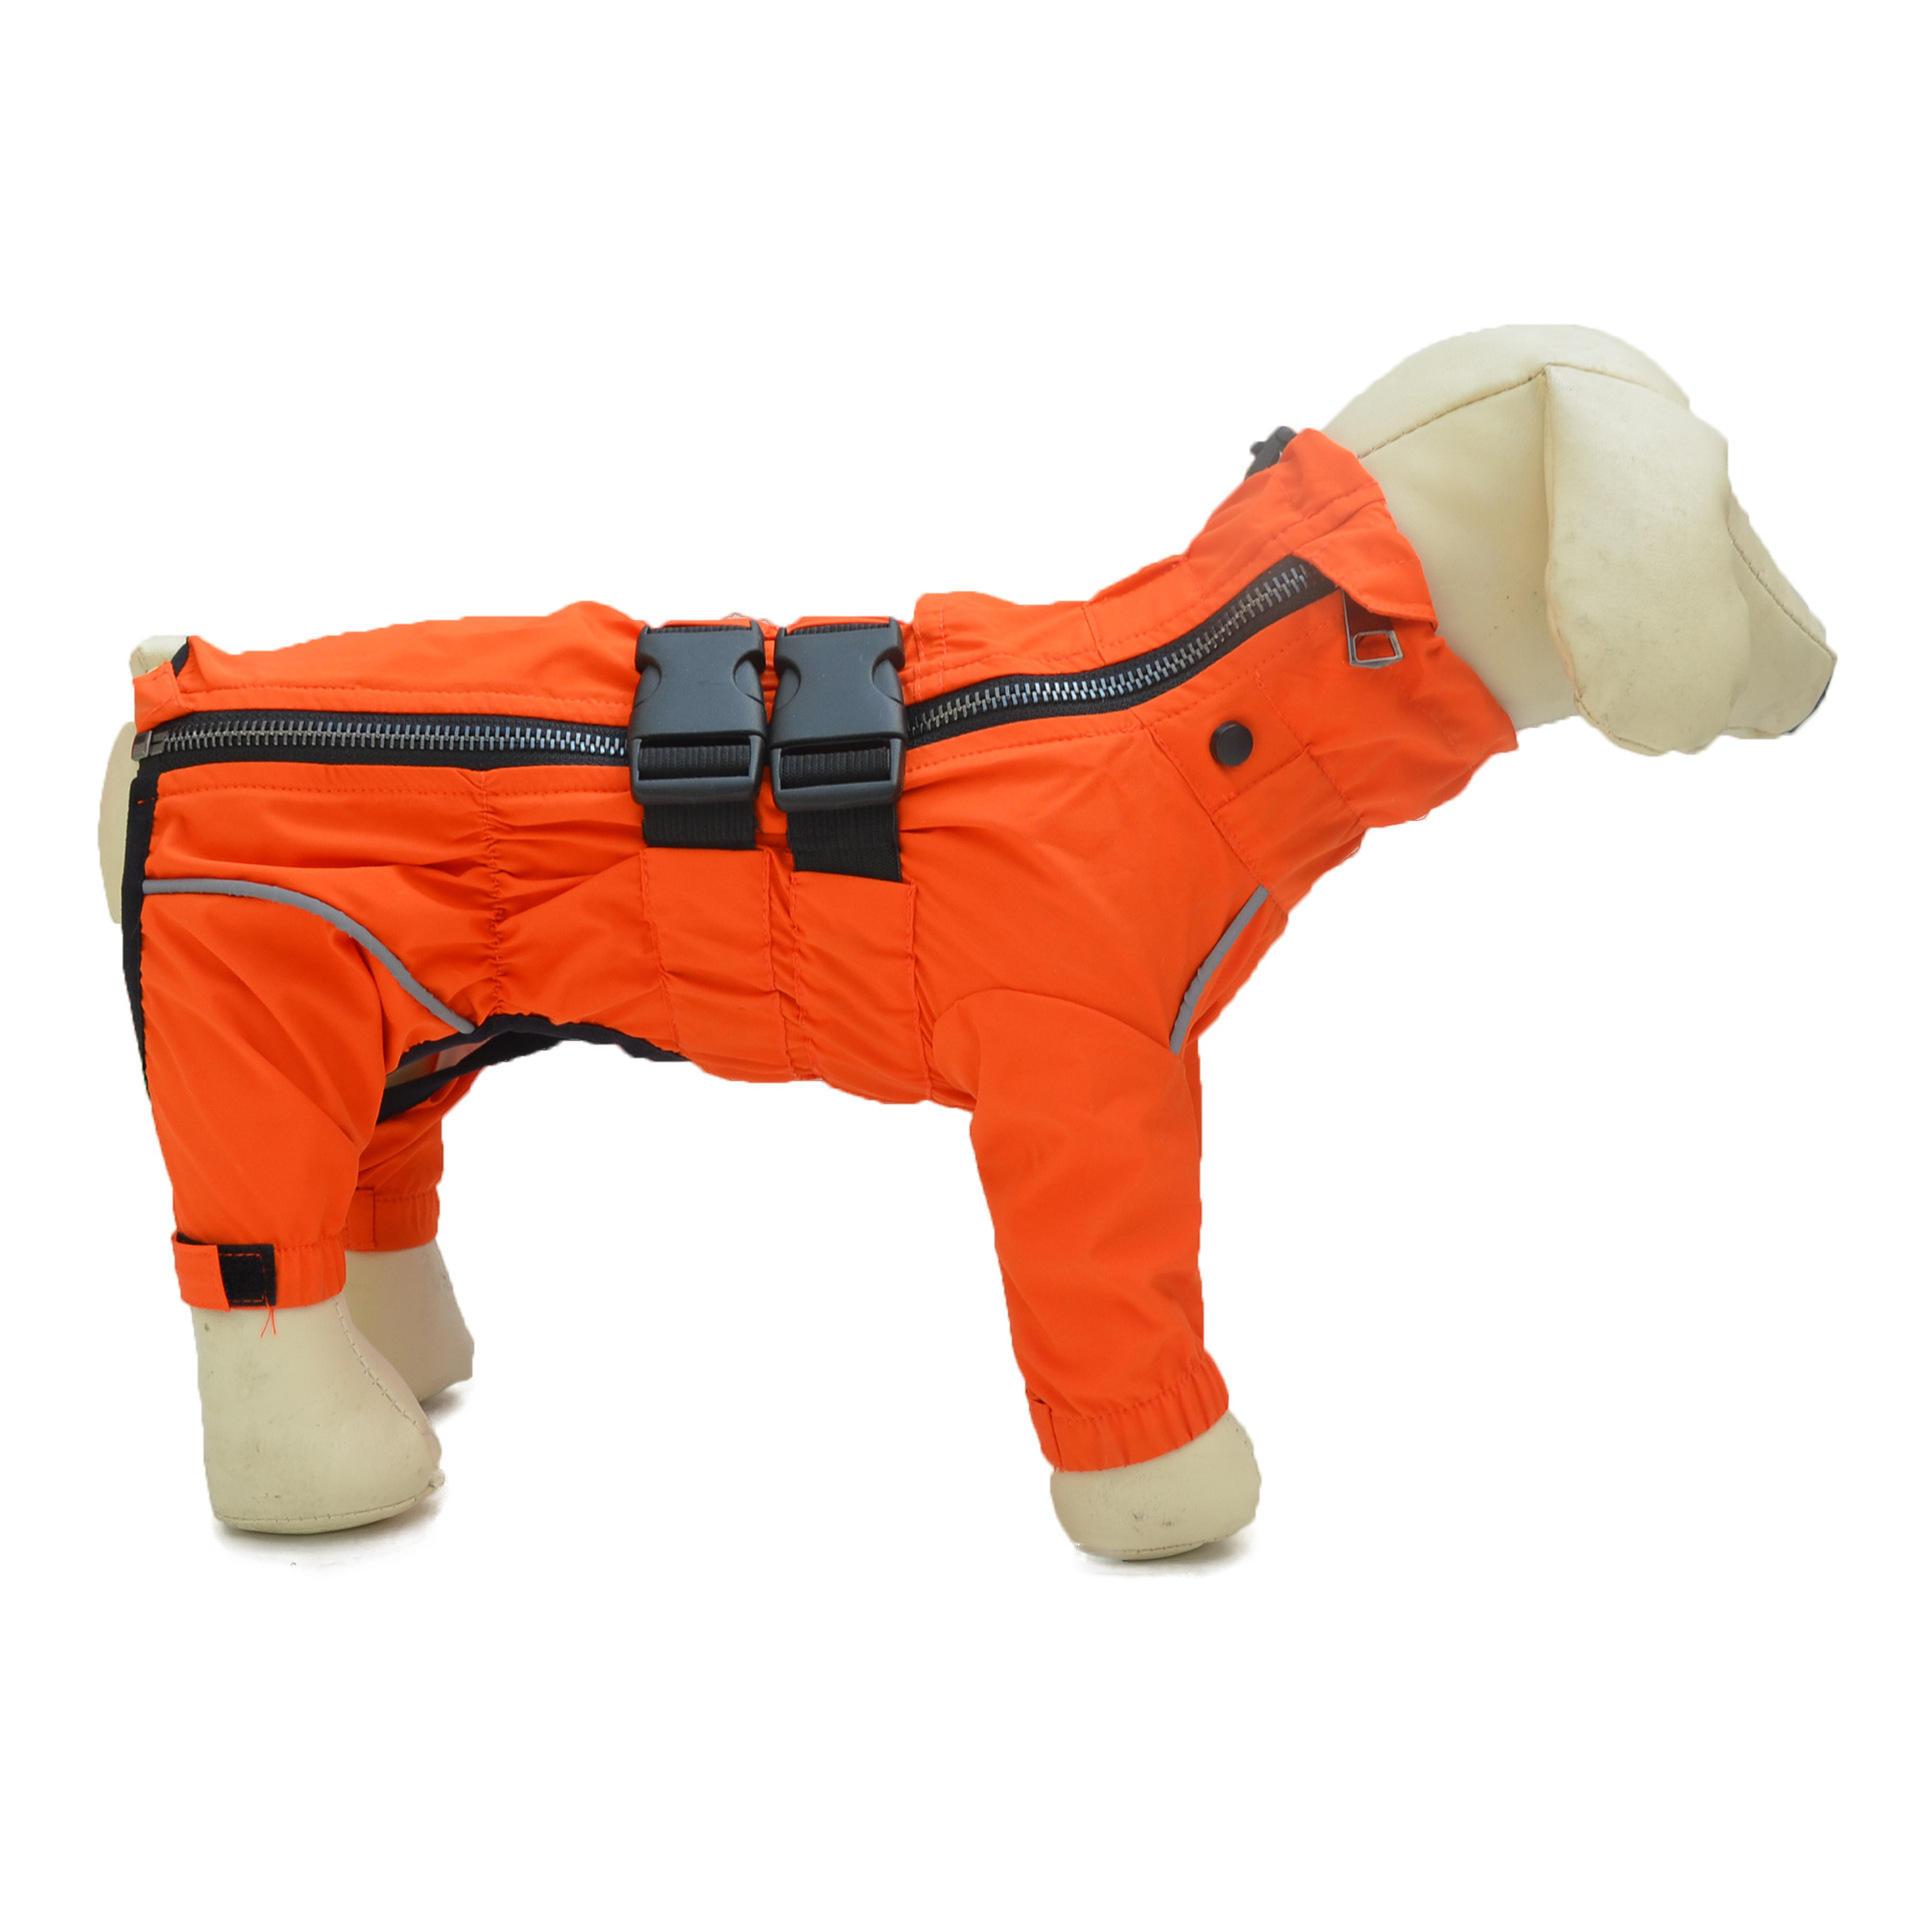 Breathable Lightweight Dog Raincoat Pet Waterproof Rain Jacket With Hood Rain For Small Medium Large Dogs